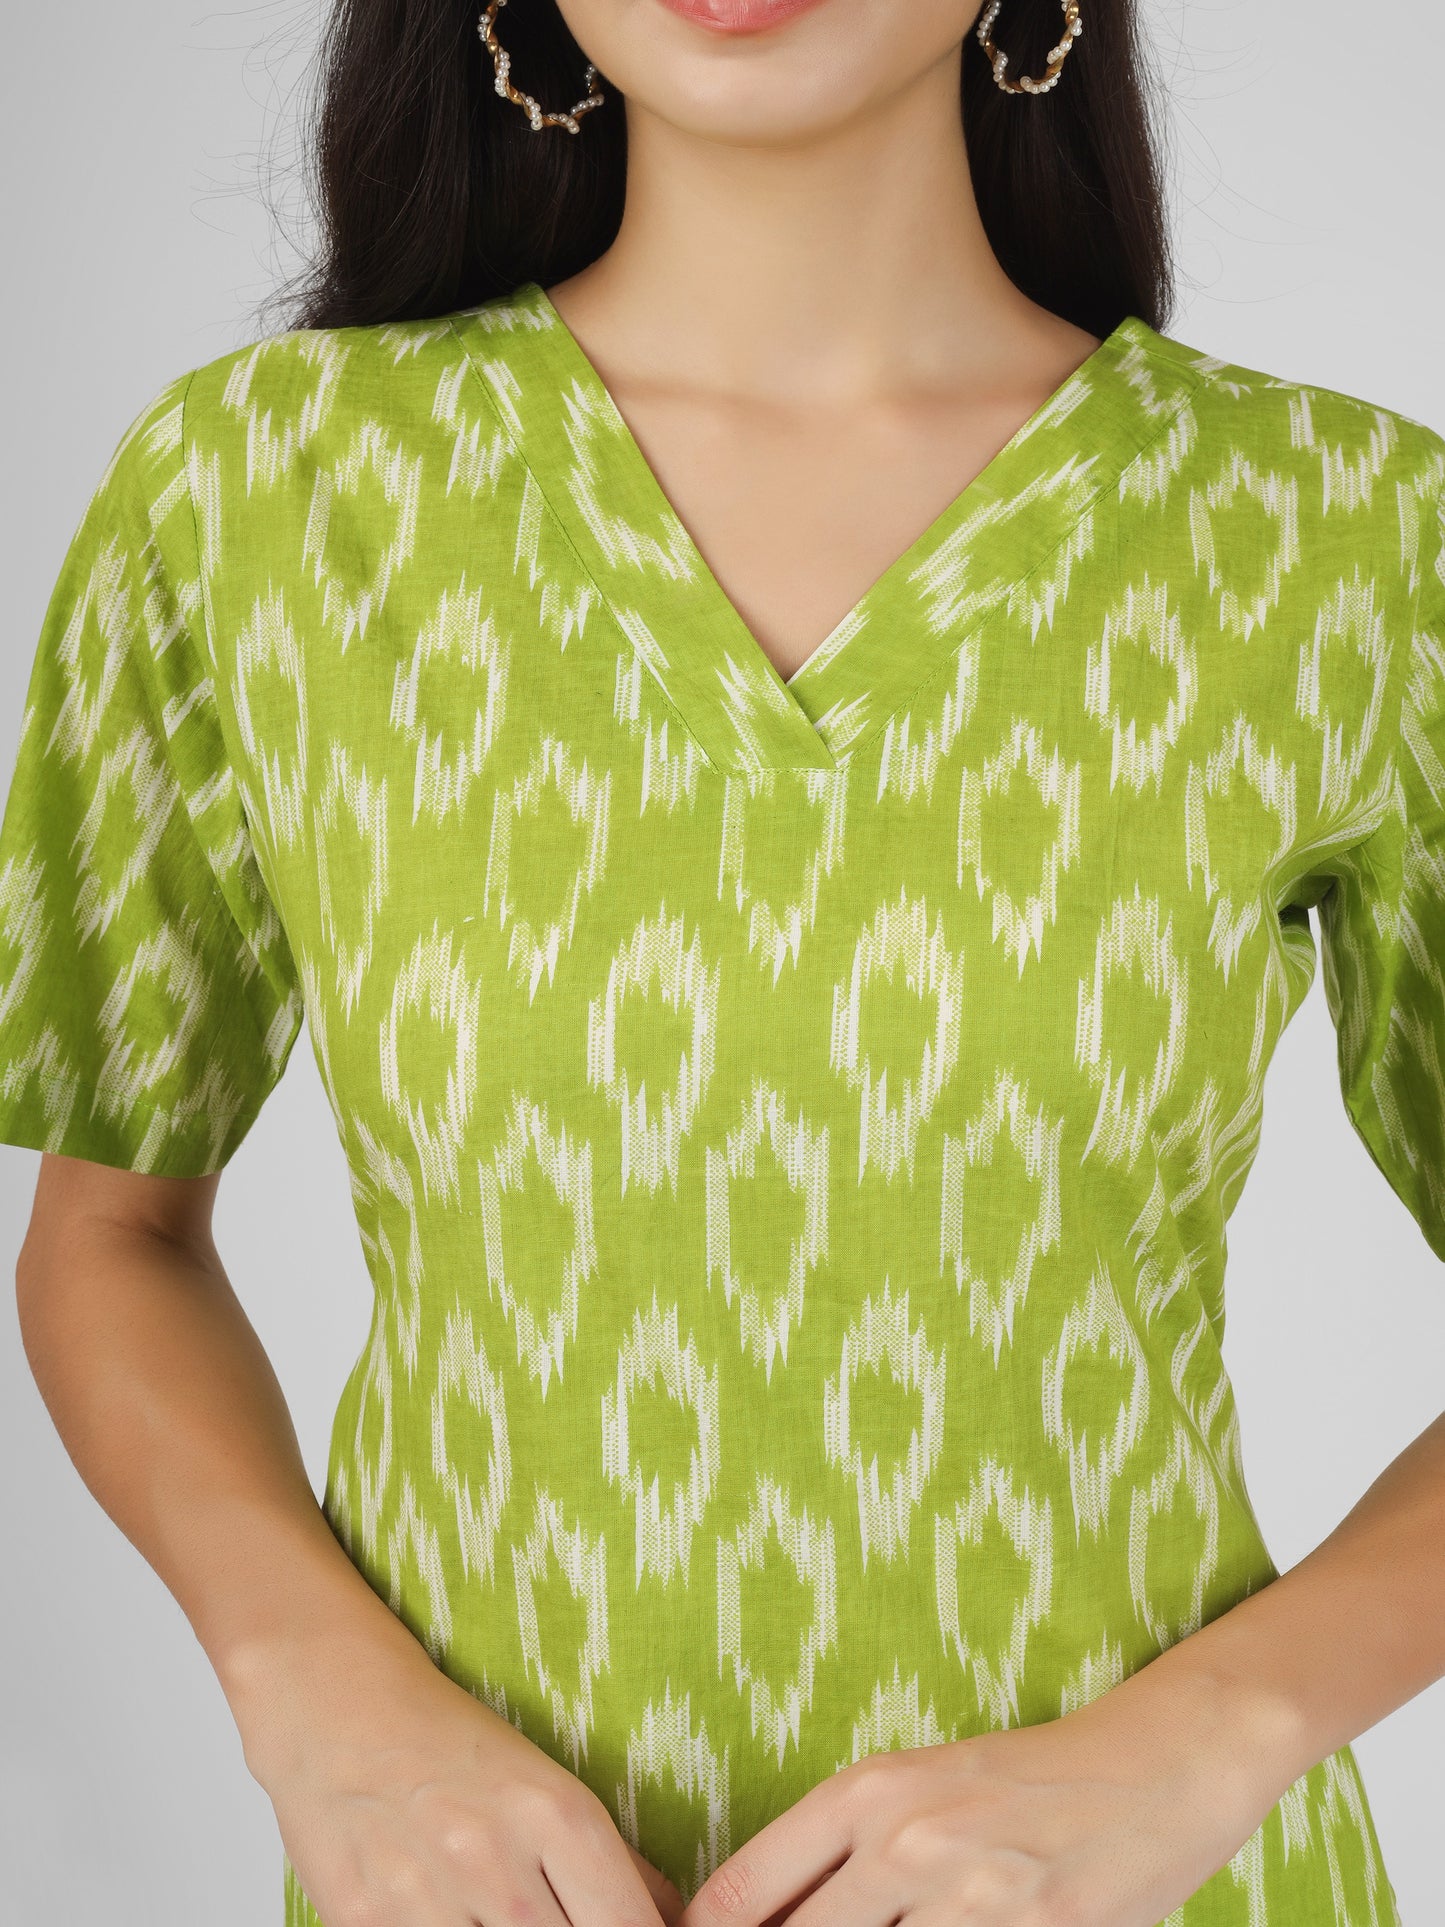 Women's Green Ikat Printed Cotton Straight Kurta with pocket